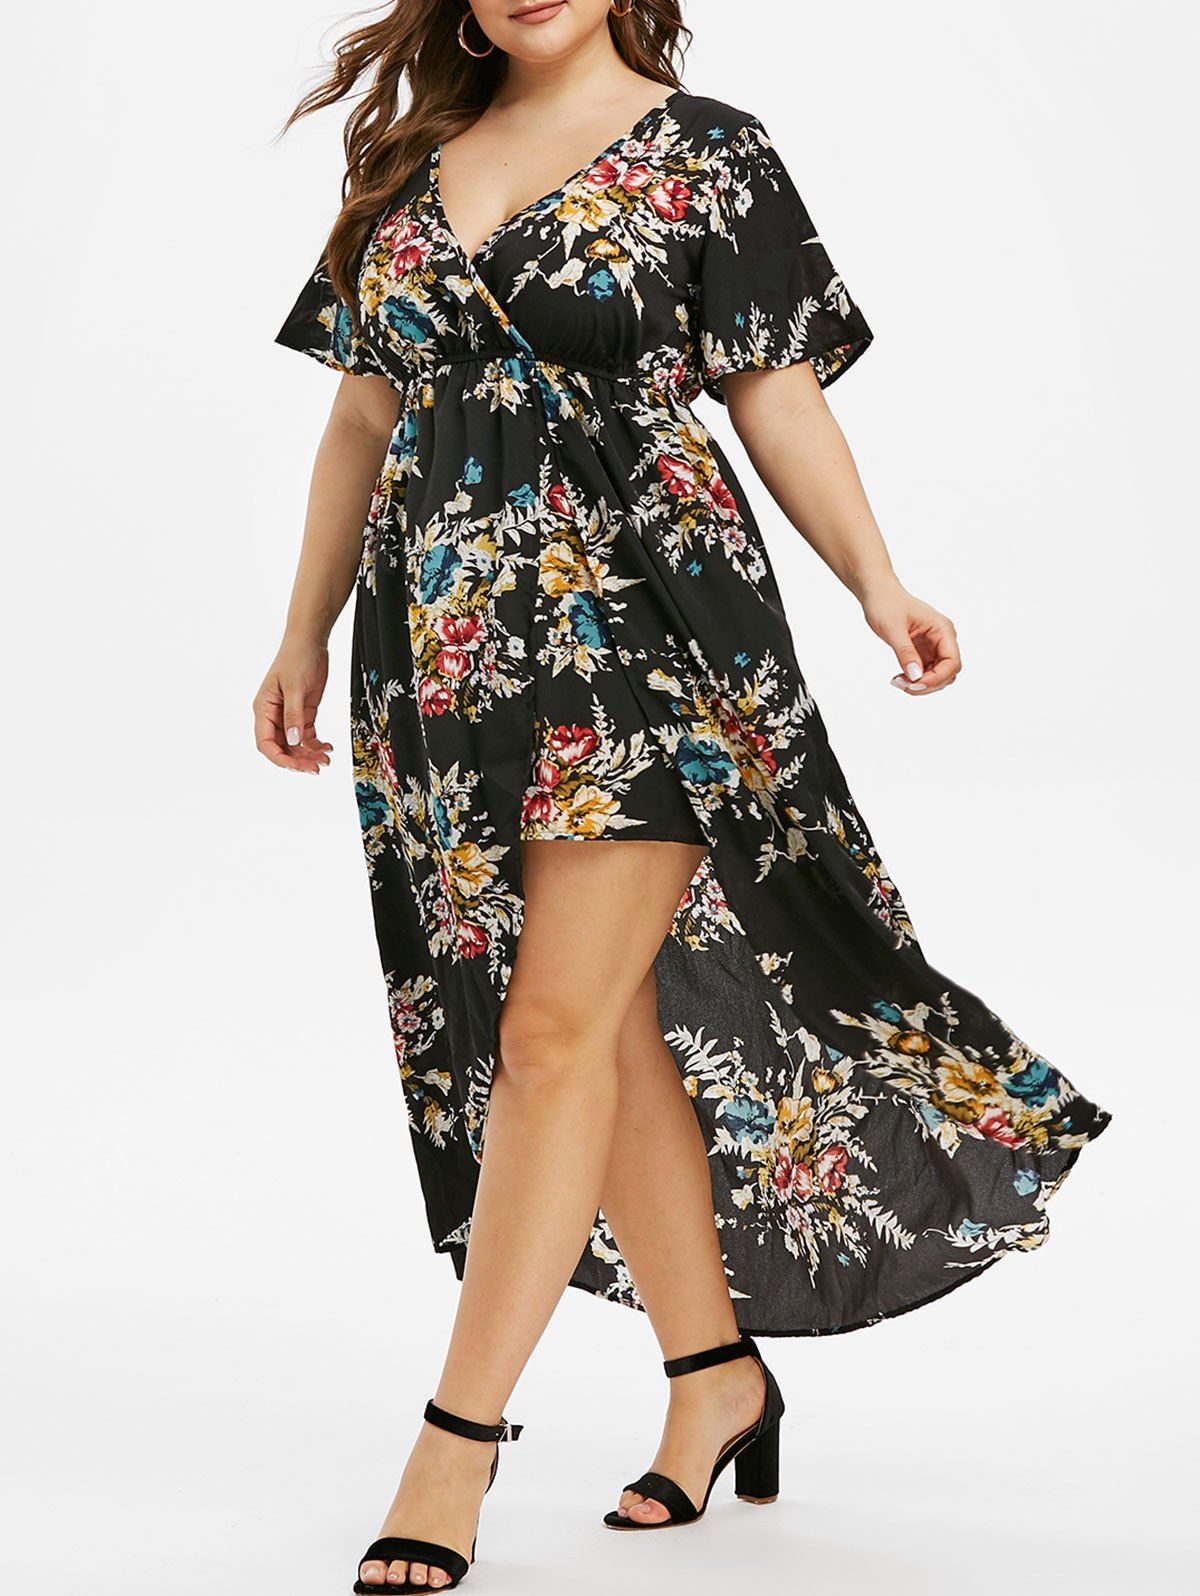 Plus Size Dress Floral Dress Flowy High Waisted Surplice High Low Maxi Dress - BLACK 4X